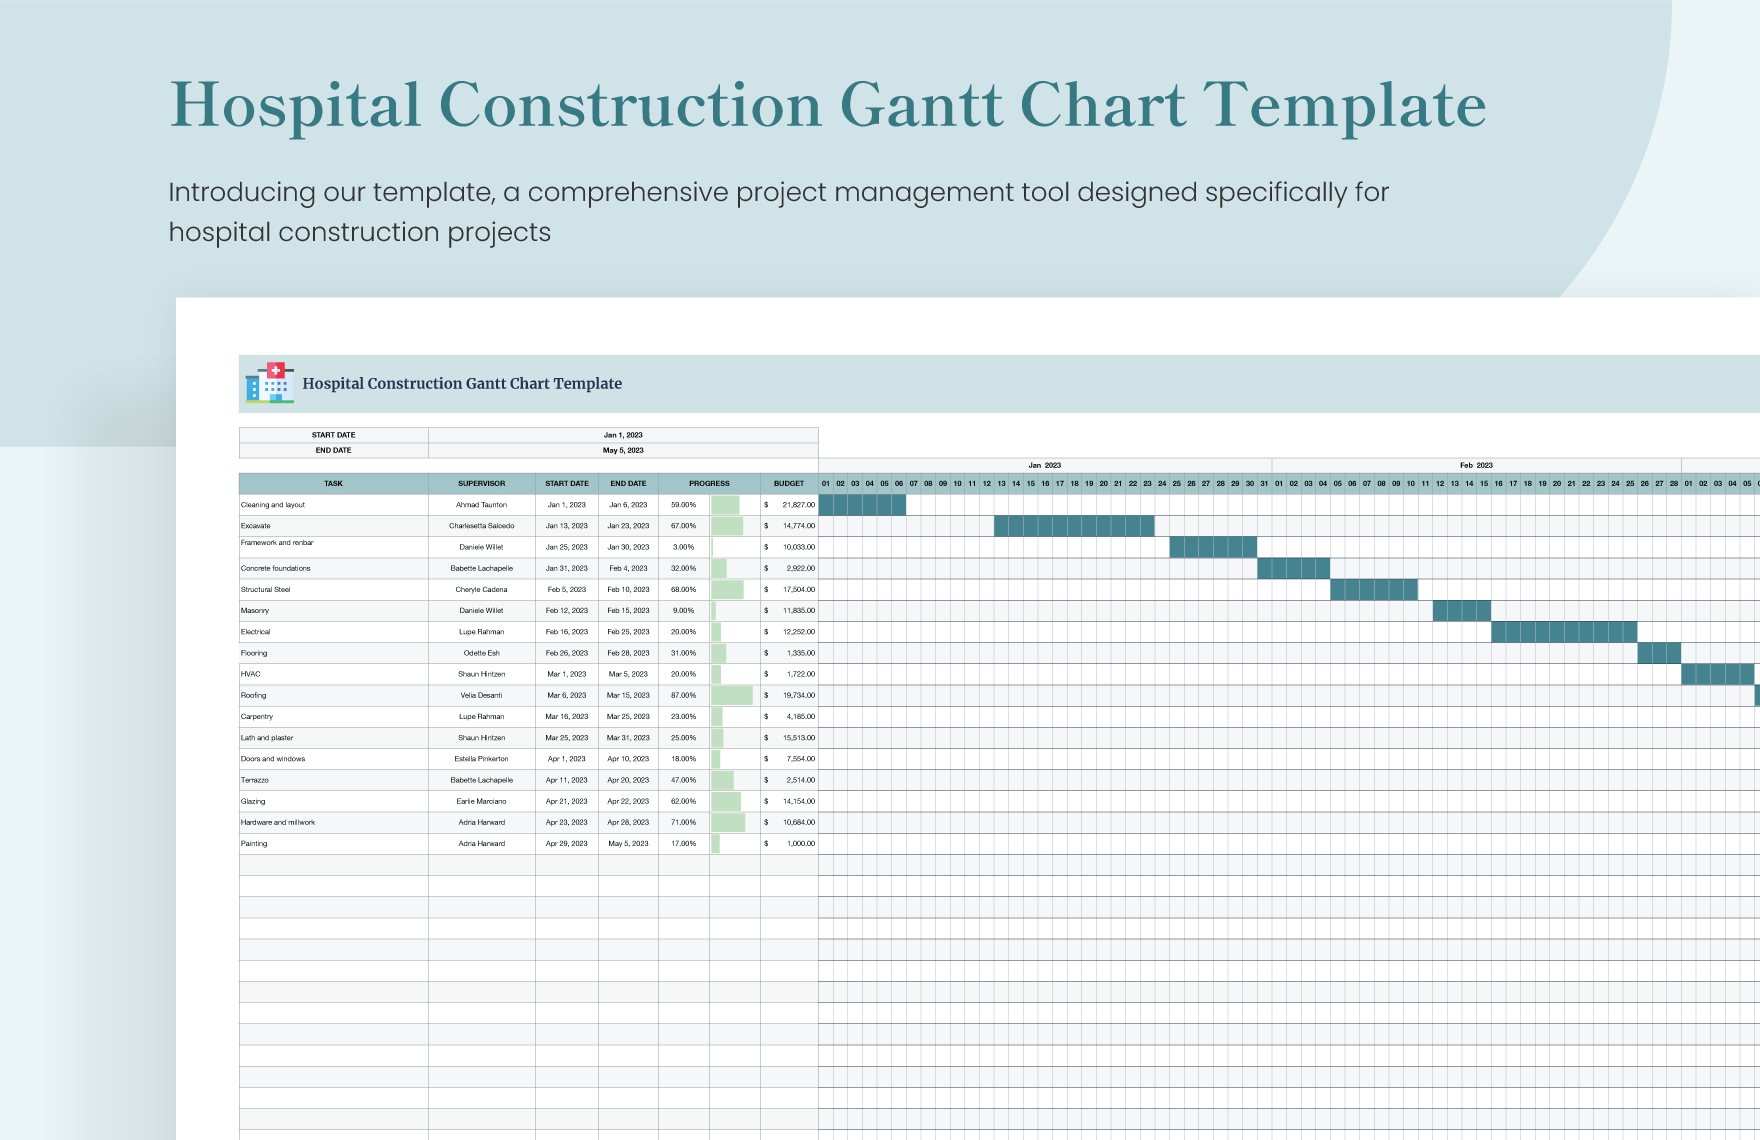 Hospital Construction Gantt Chart Template in Excel, Google Sheets